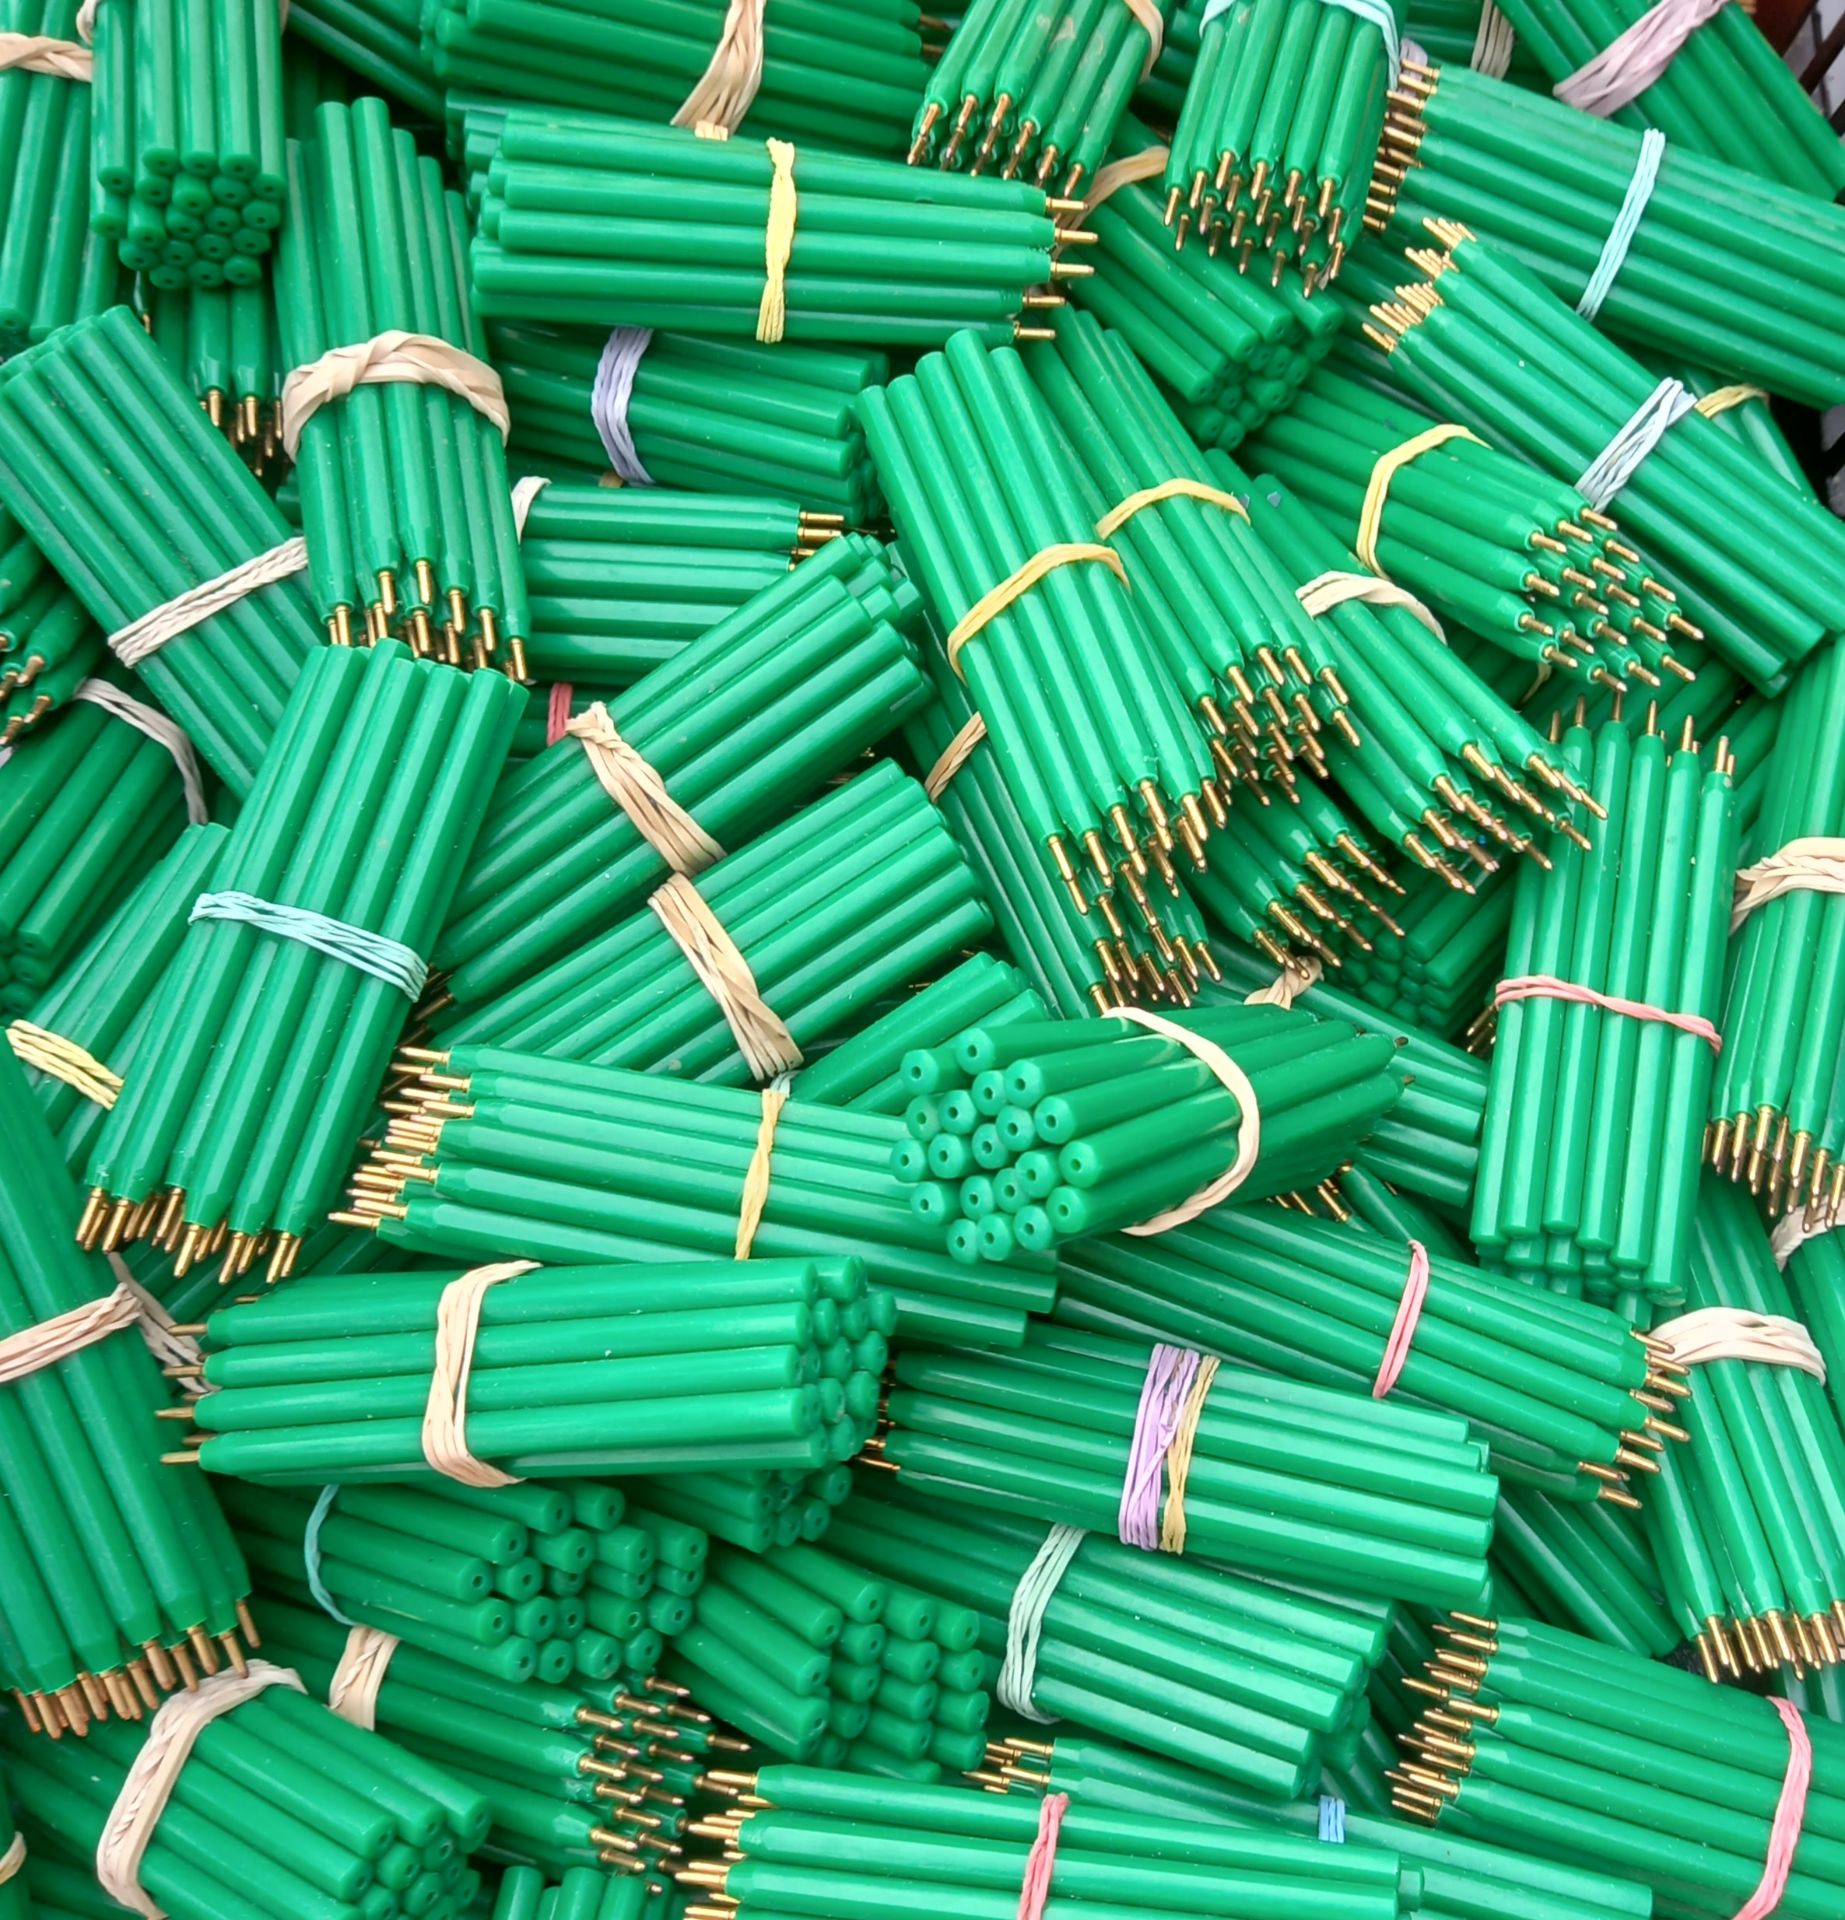 100 Brand New Green Plastic Pens.